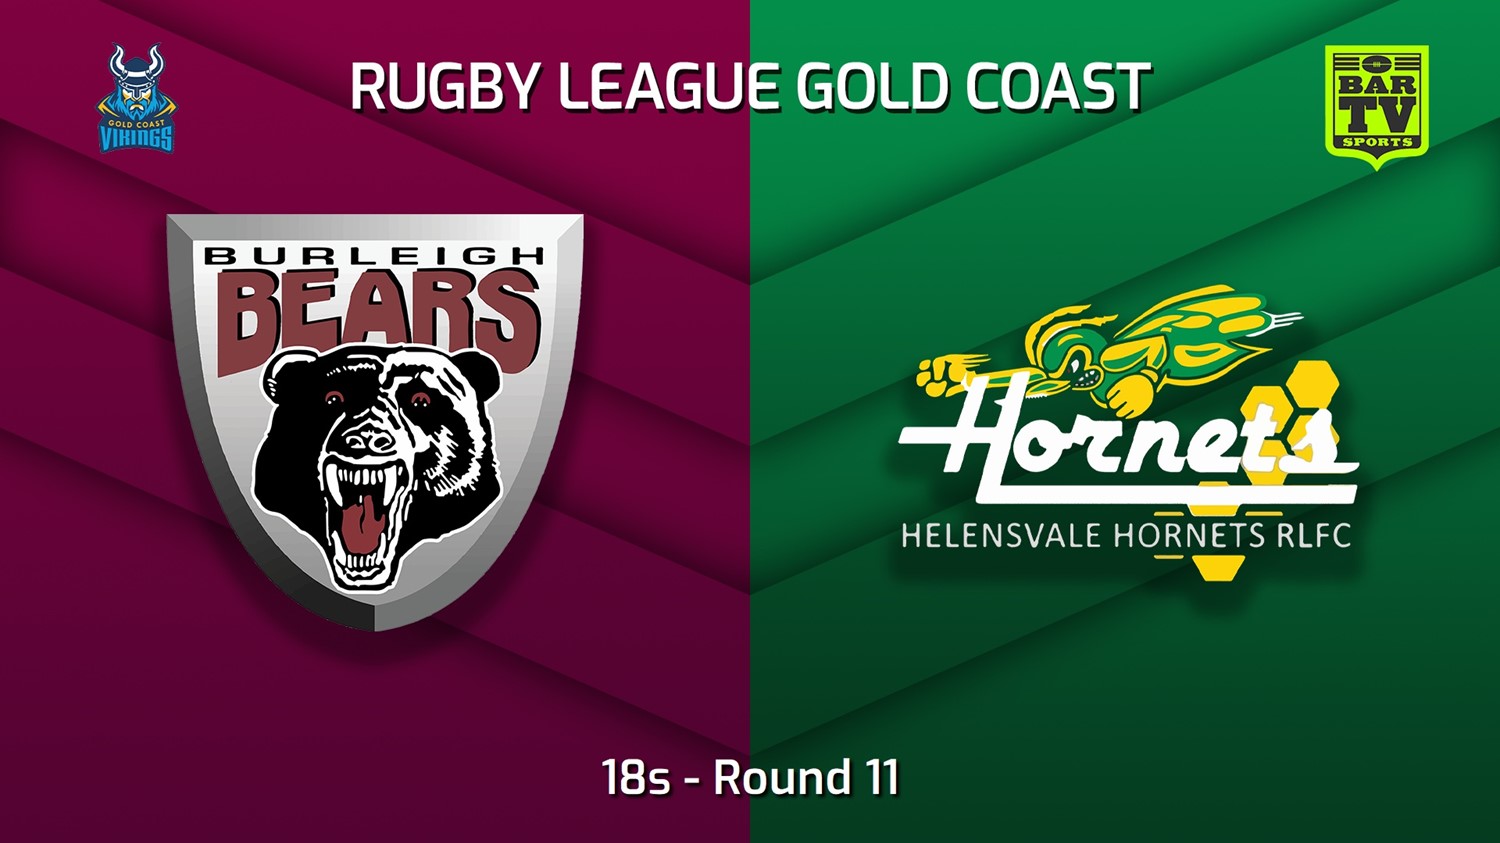 220617-Gold Coast Round 11 - 18s - Burleigh Bears v Helensvale Hornets Slate Image